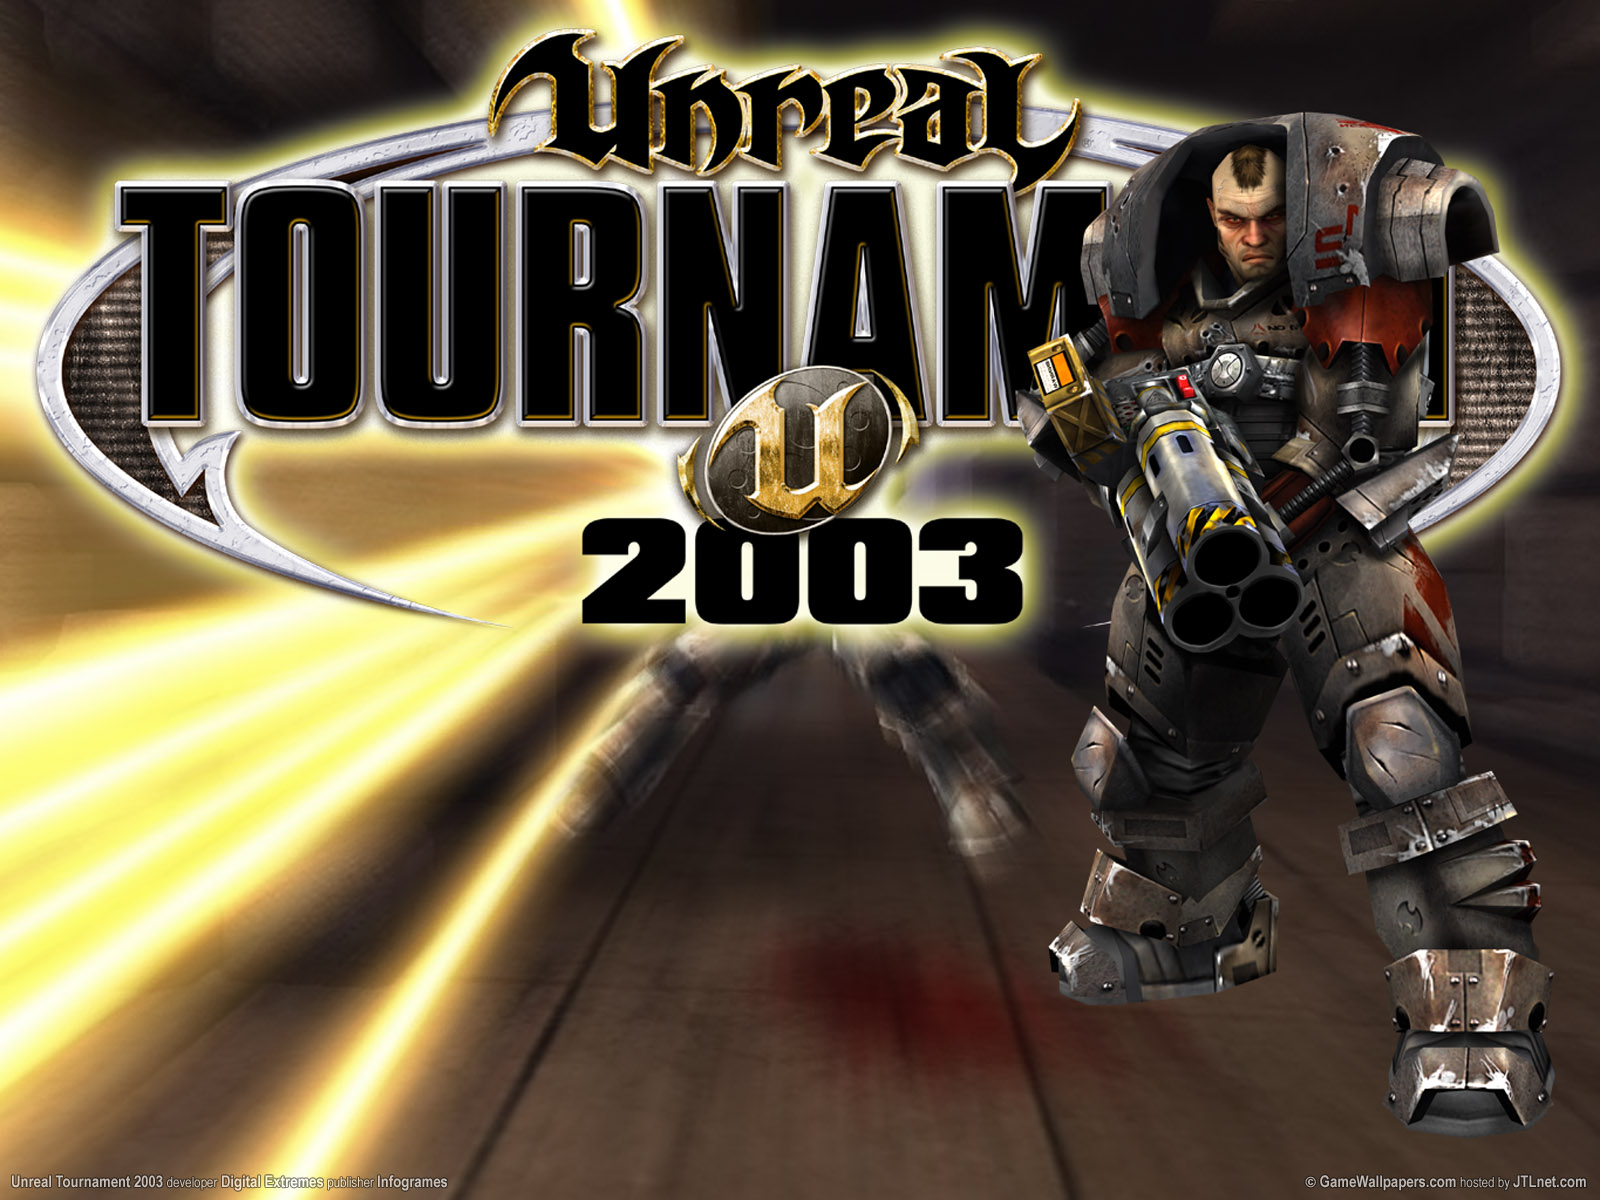 Unreal Tournament Artwork Video Games Unreal Tournament 2003 2003 Year 1600x1200